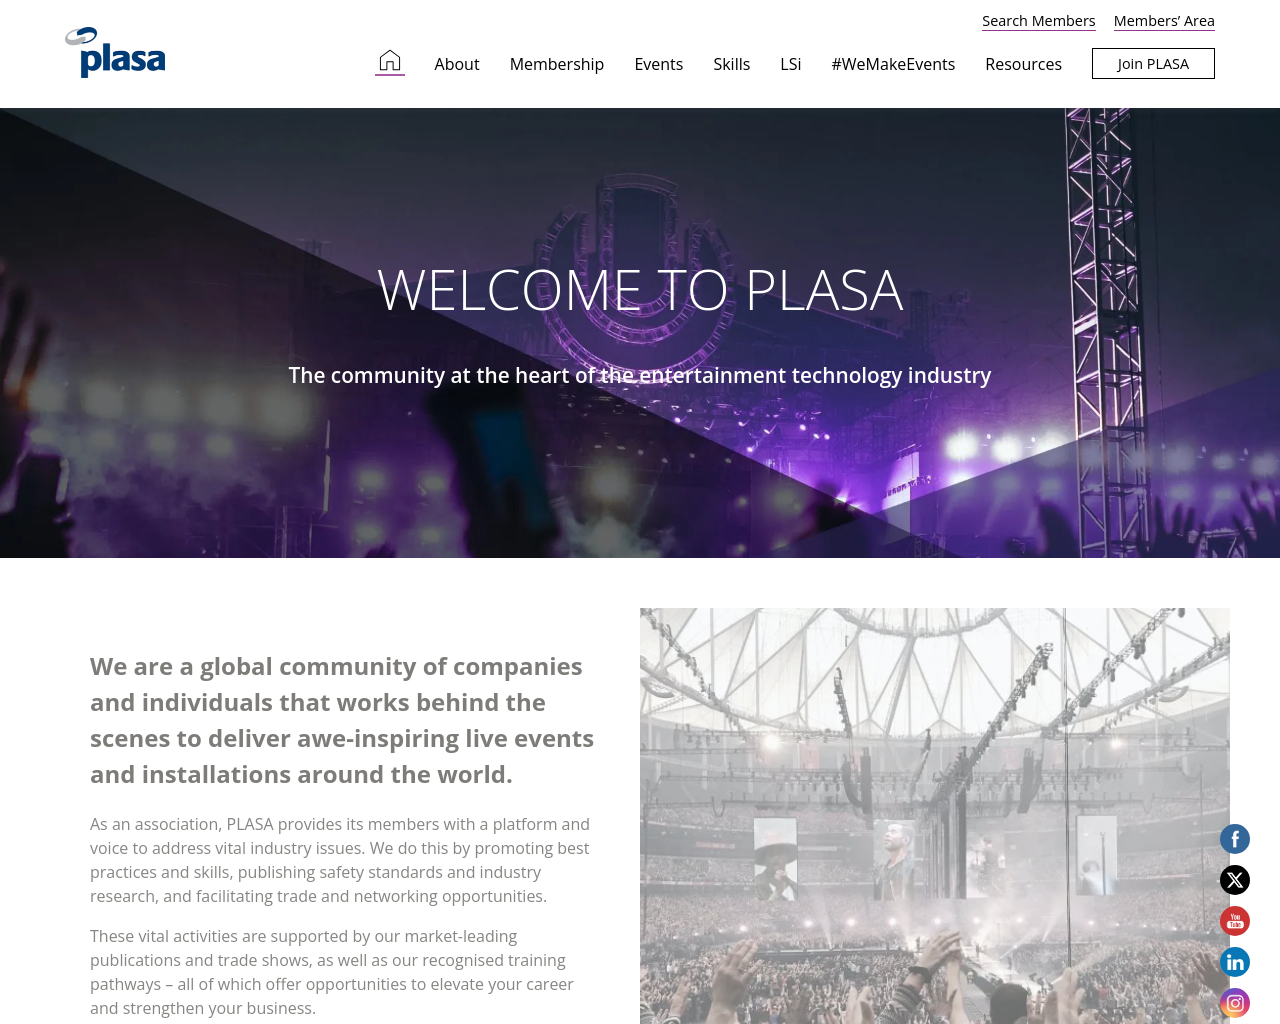 plasa.org